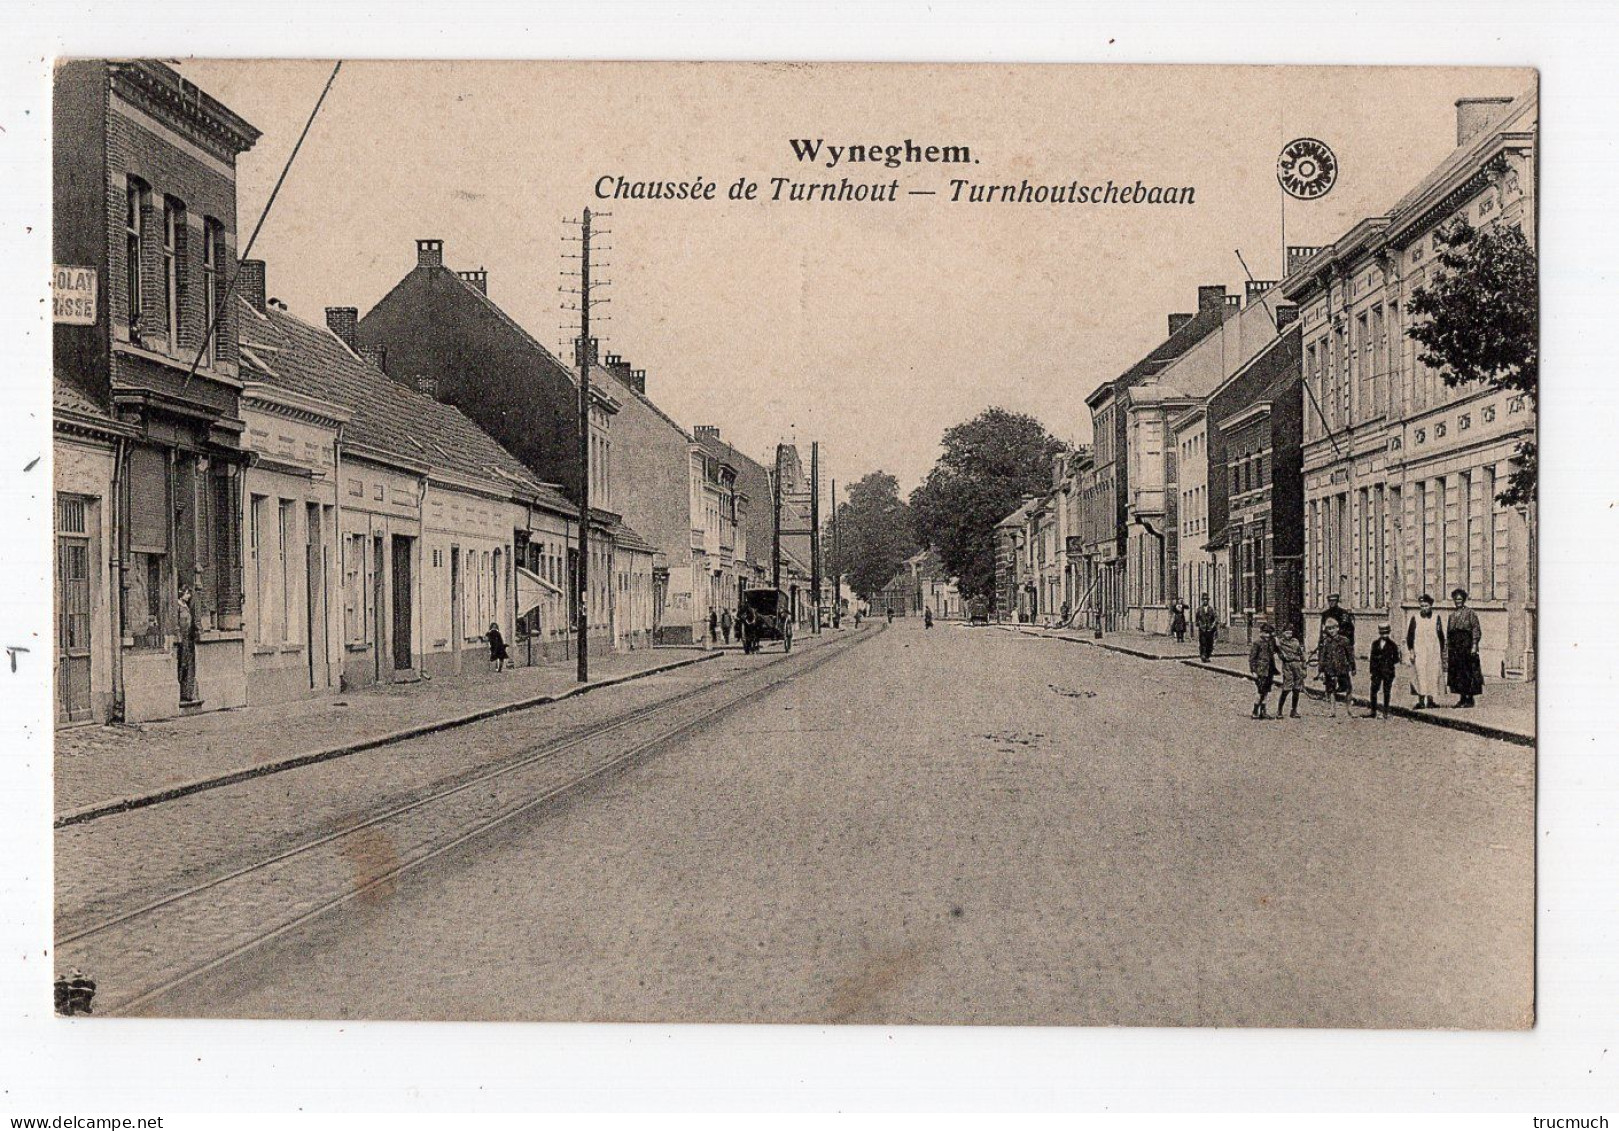 WYNEGHEM - Chaussée De Turnhout - Turnhoutschebaan - Wijnegem